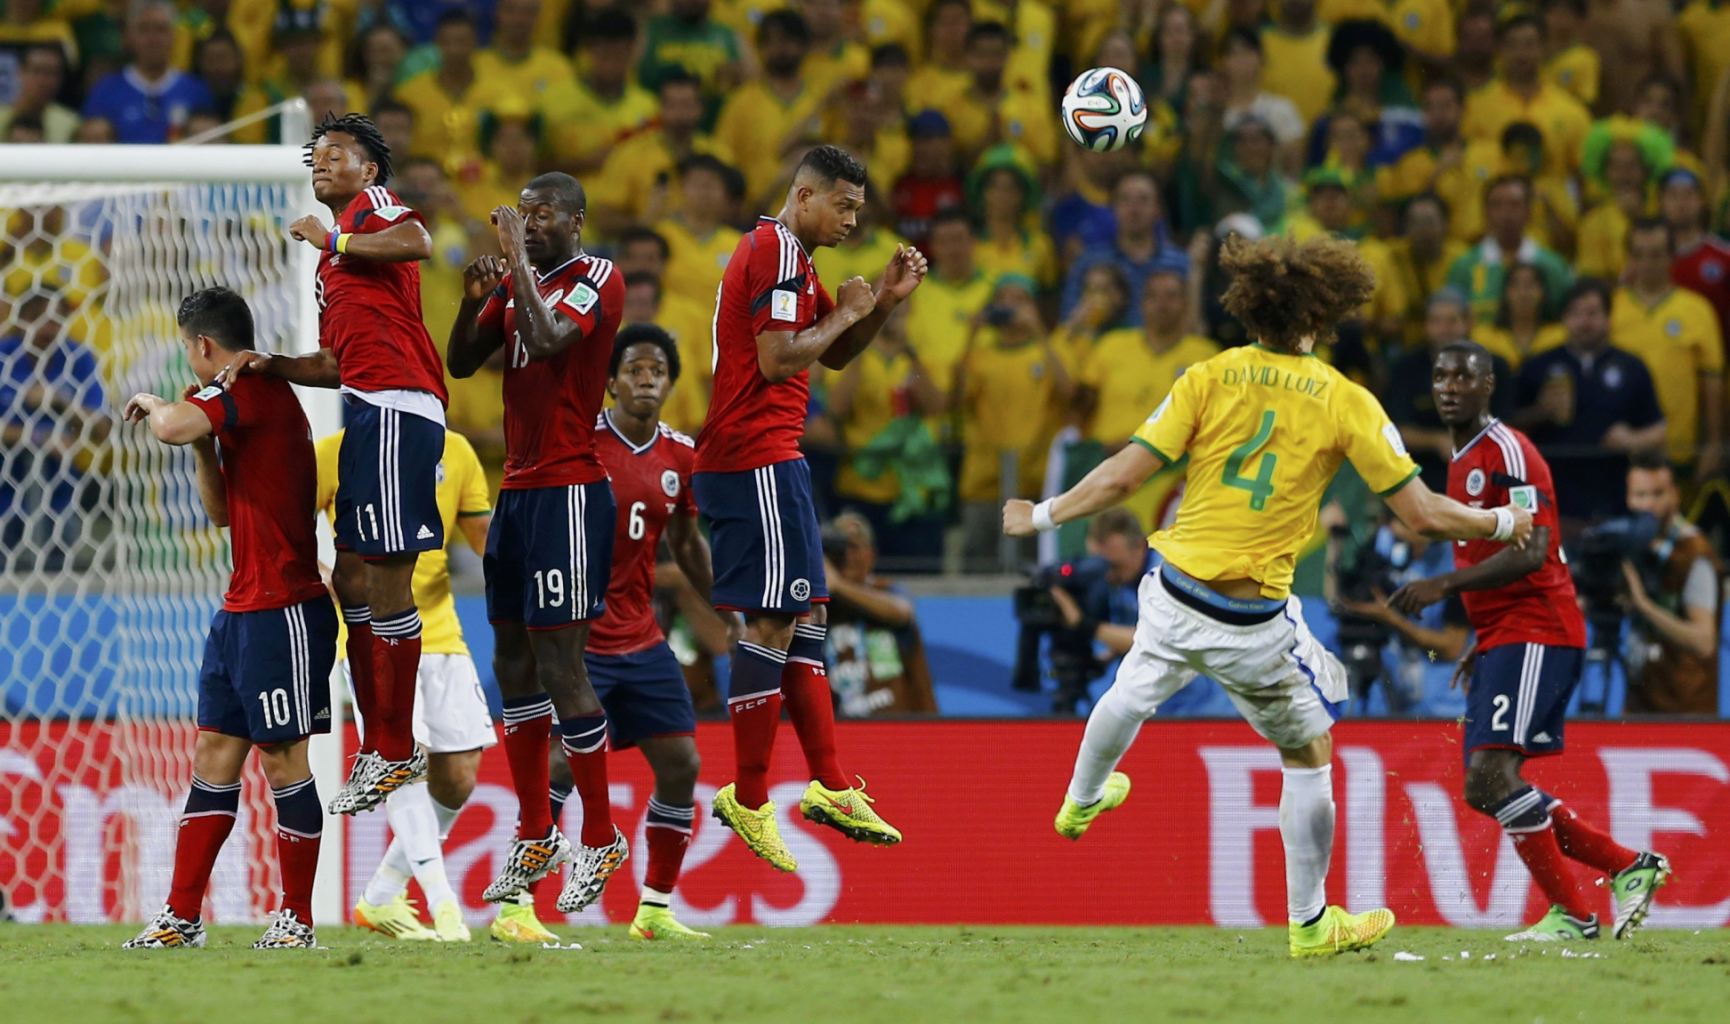 David Luiz free-kick goal, in Brazil vs Colombia, at the FIFA World Cup 2014